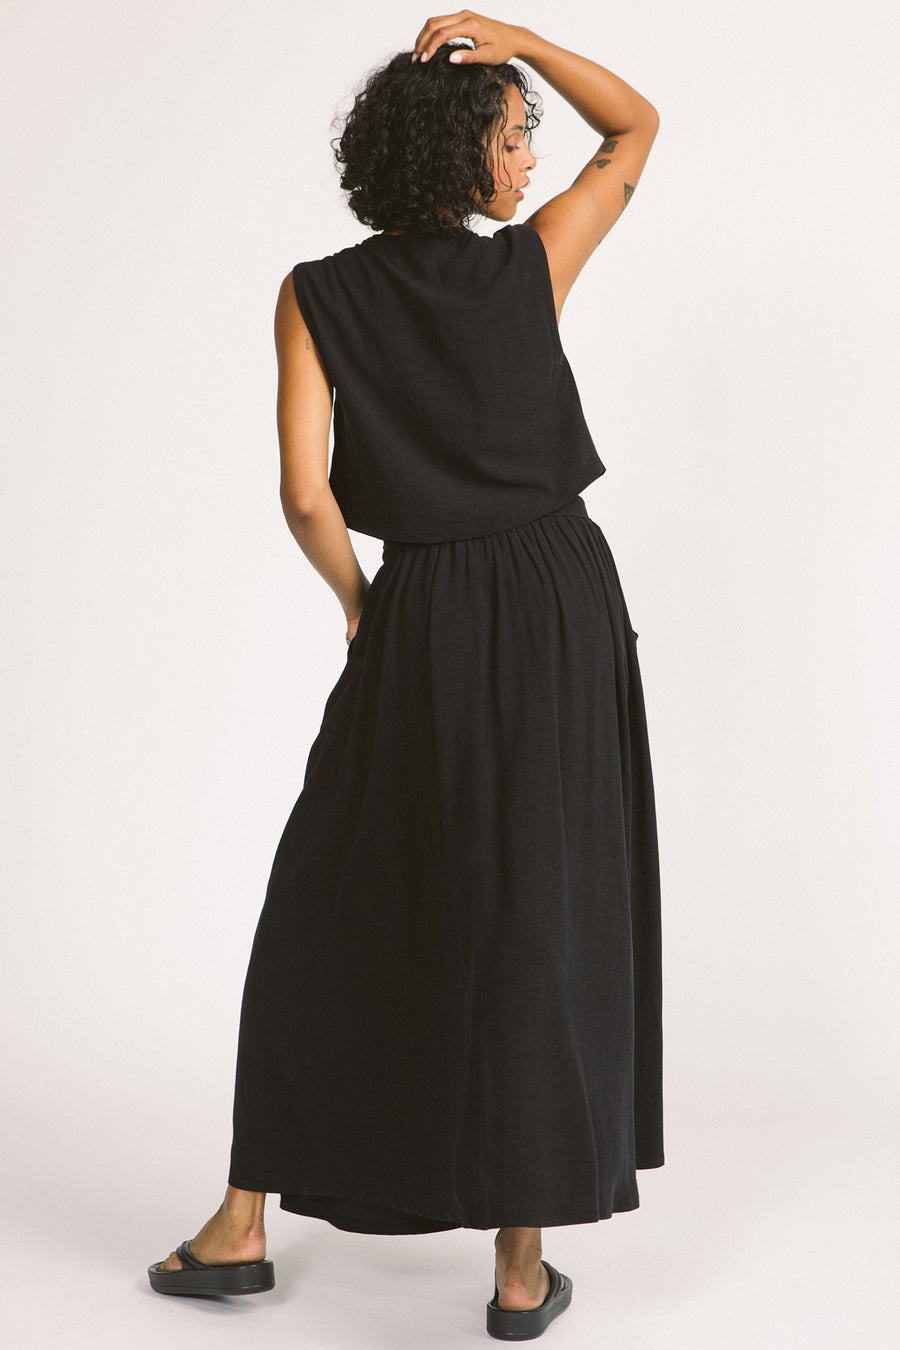 Back view of woman wearing black cowl neck sleeveless Kiko blouse by Allison Wonderland. 